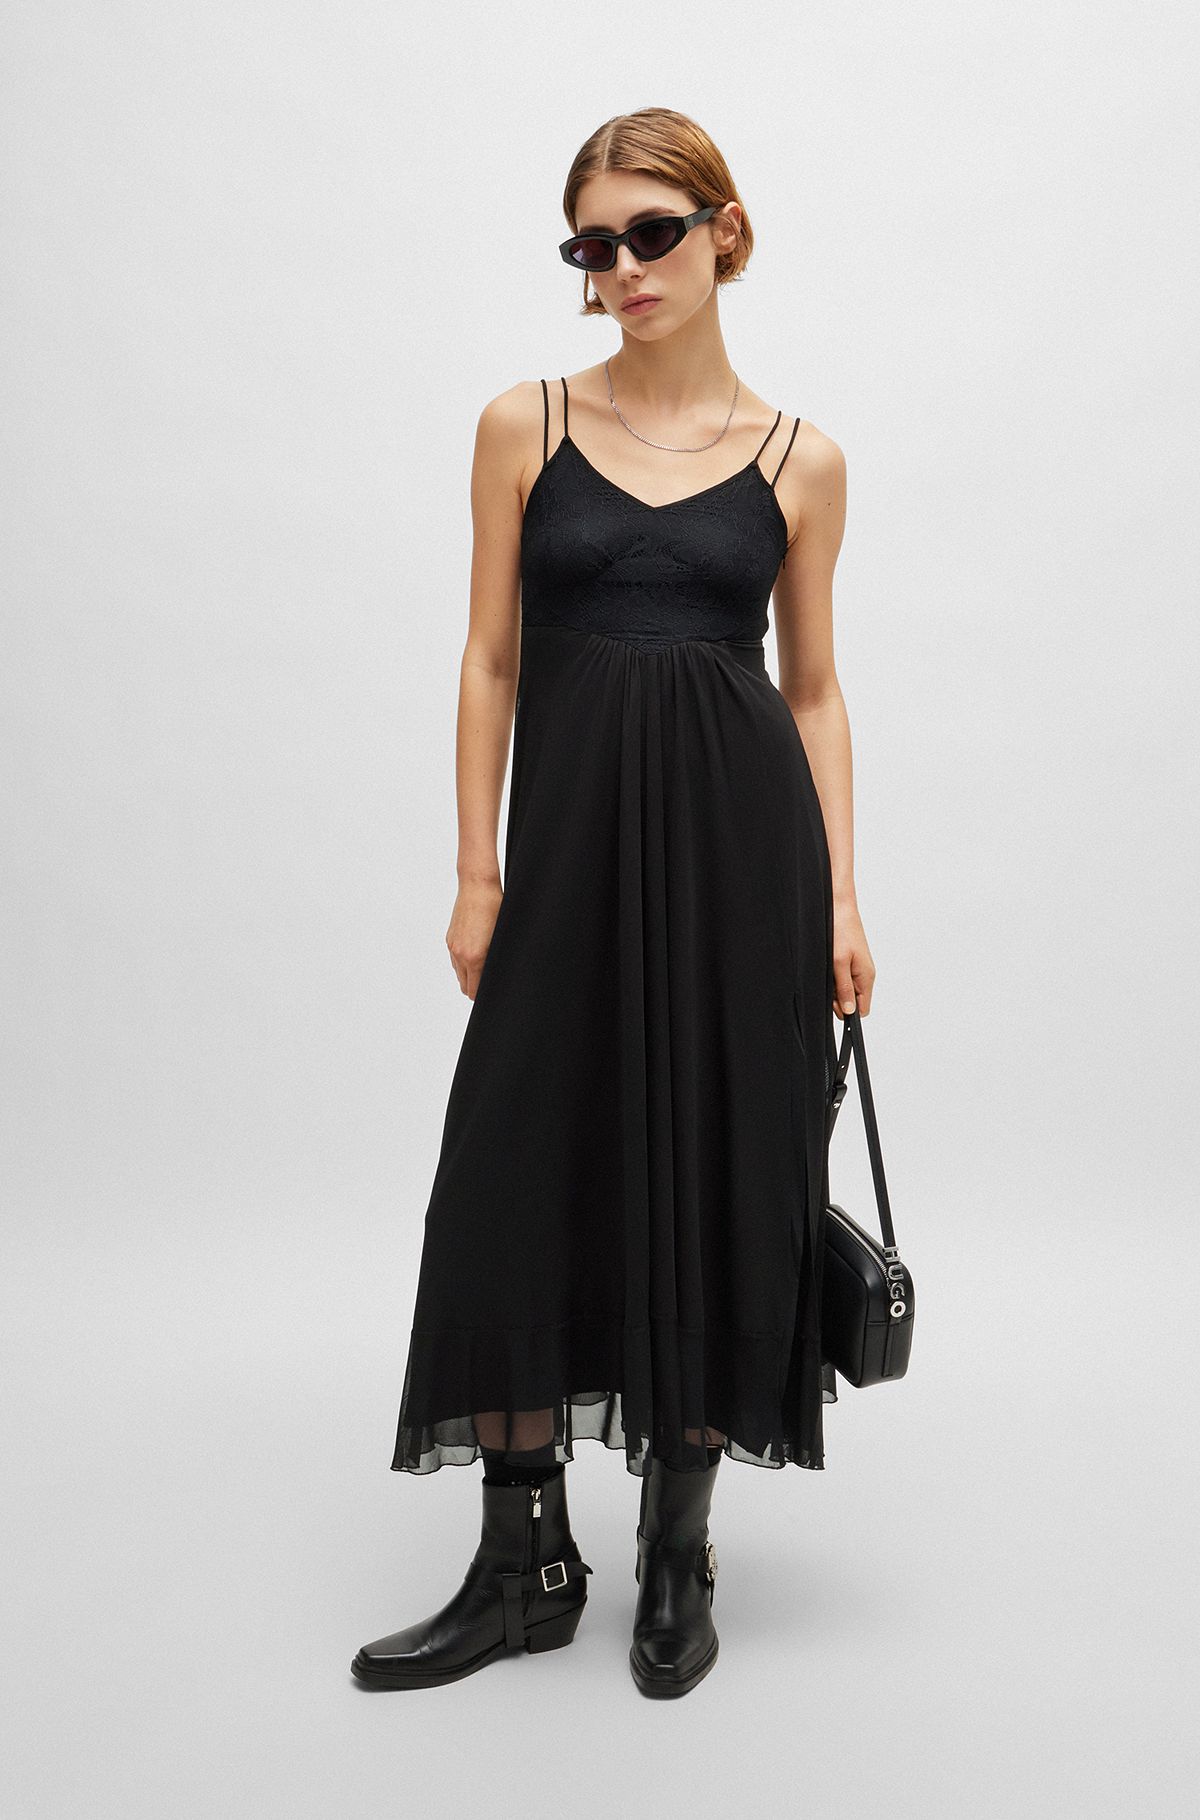 hoksml Black Dress for Women, Casual Lace V-Neck Sleeveless Mini